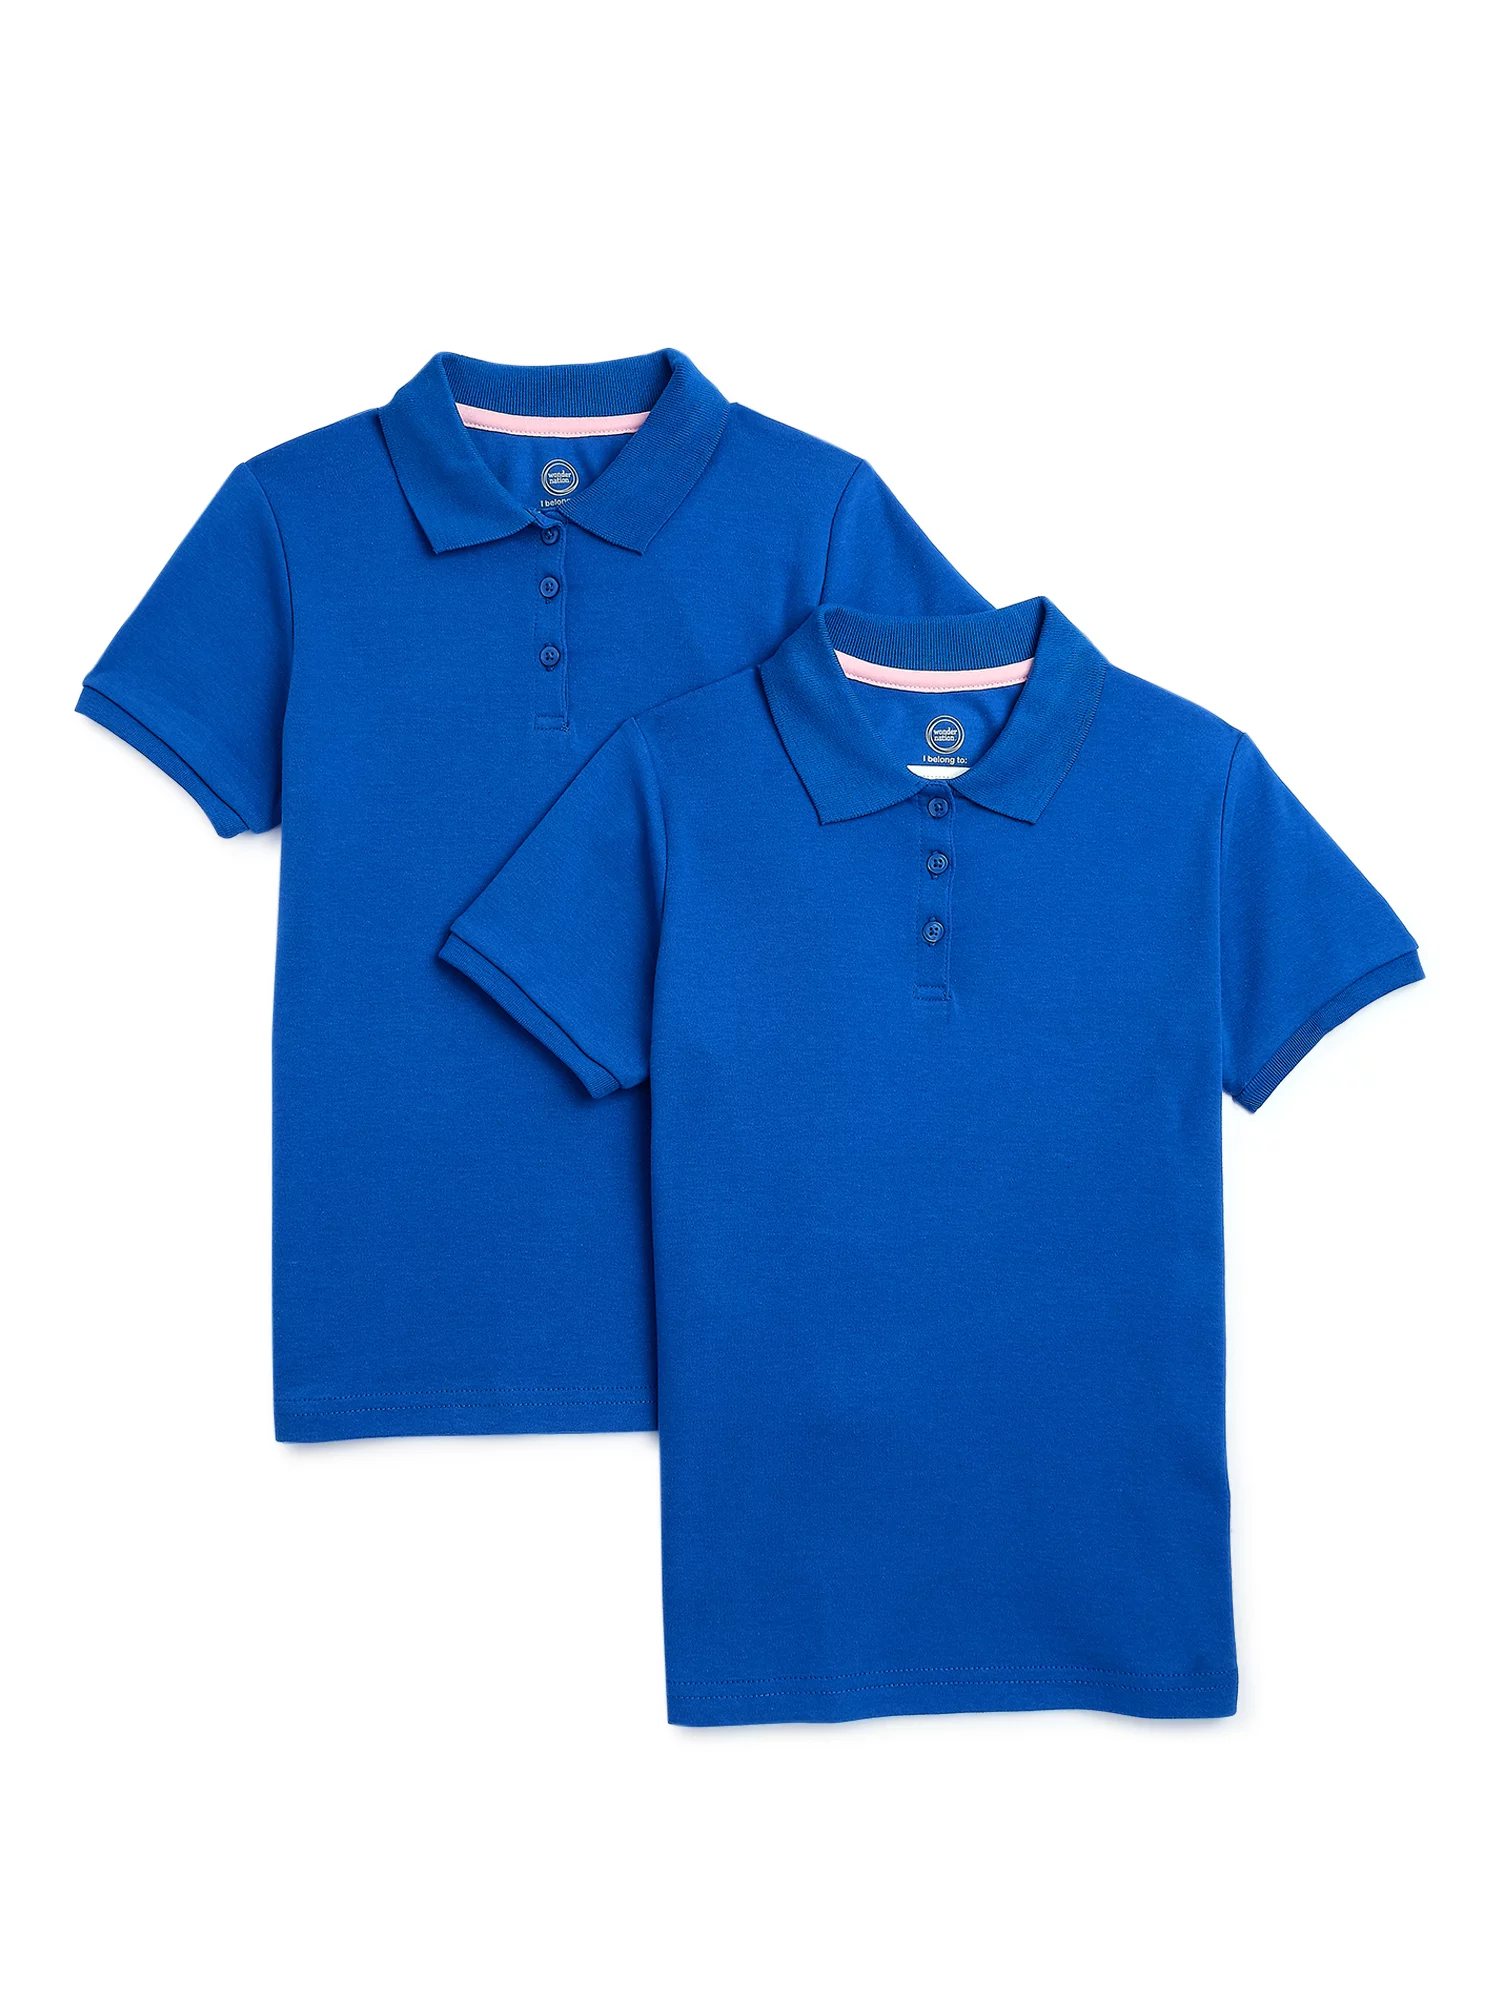 Girls School Uniform Polo Shirt Usa